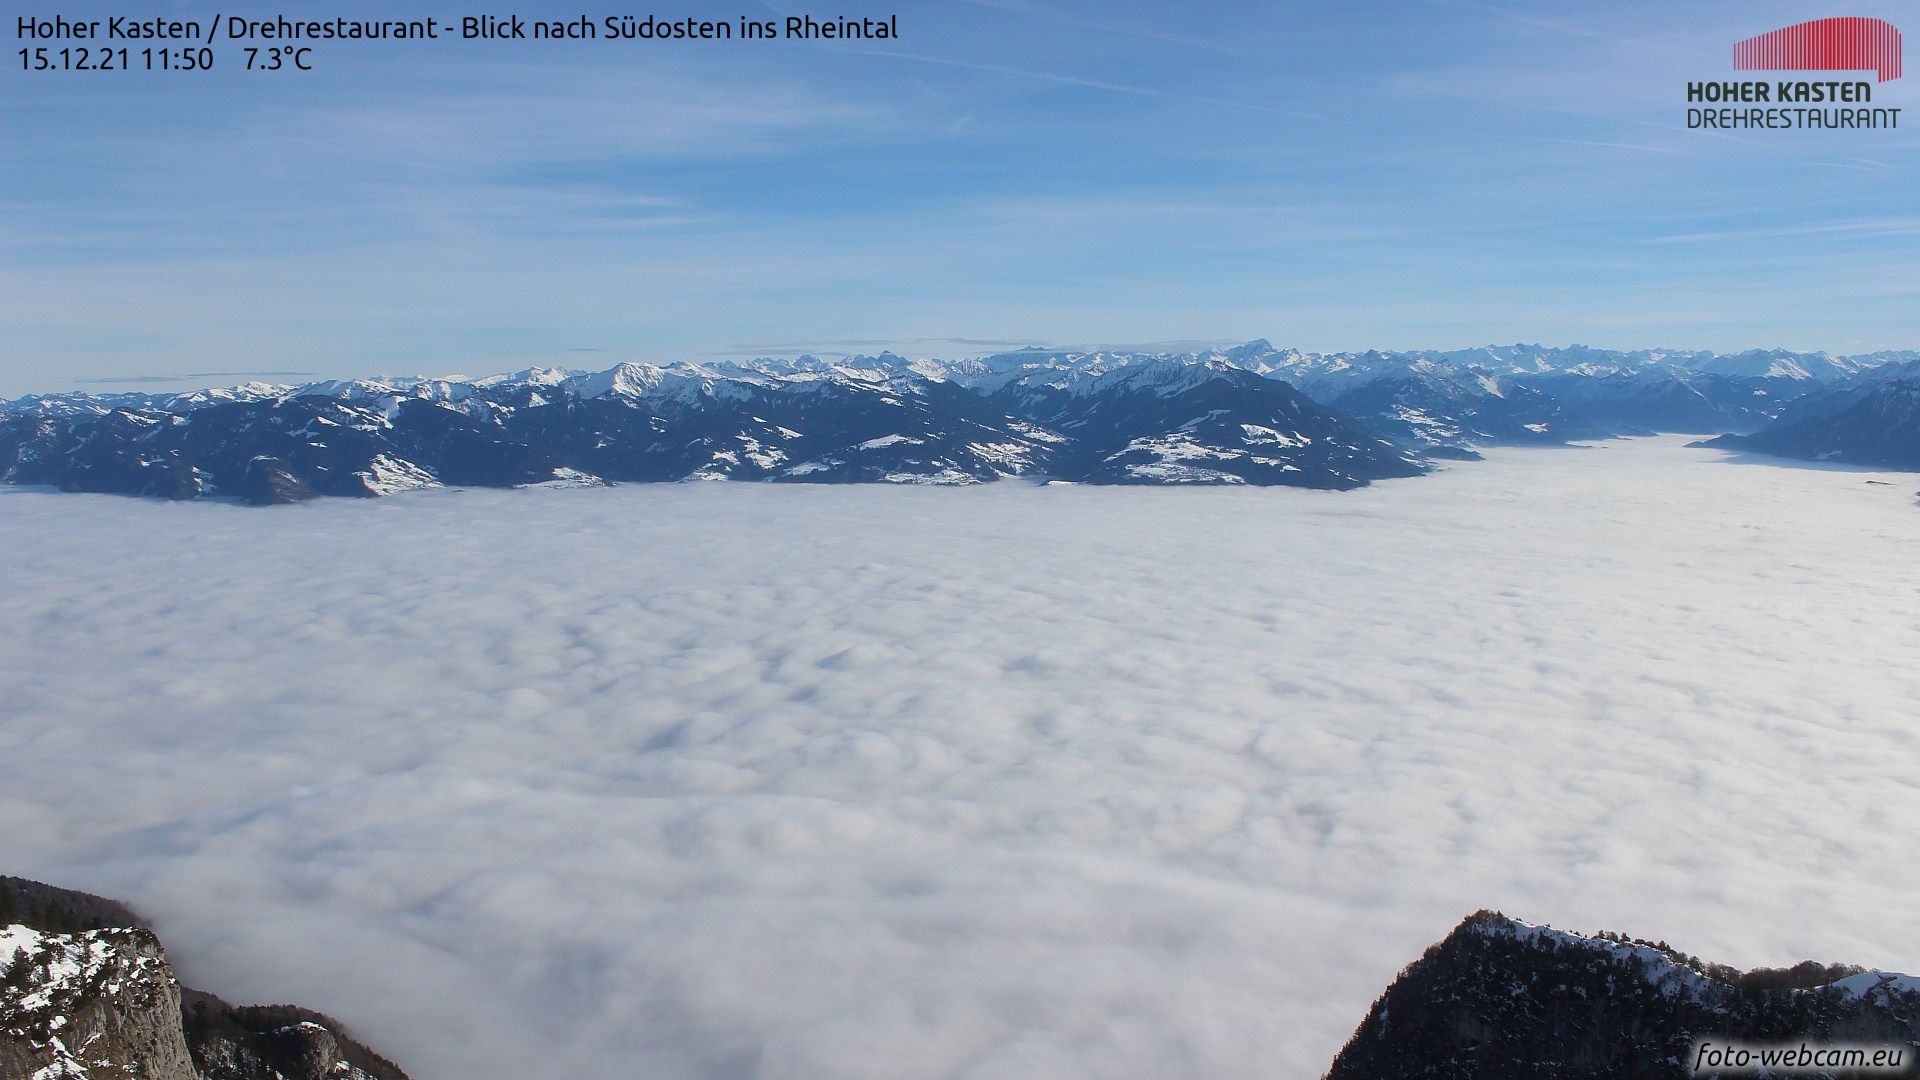 Inversion weather in the Rhine Valley (foto-webcam.eu)